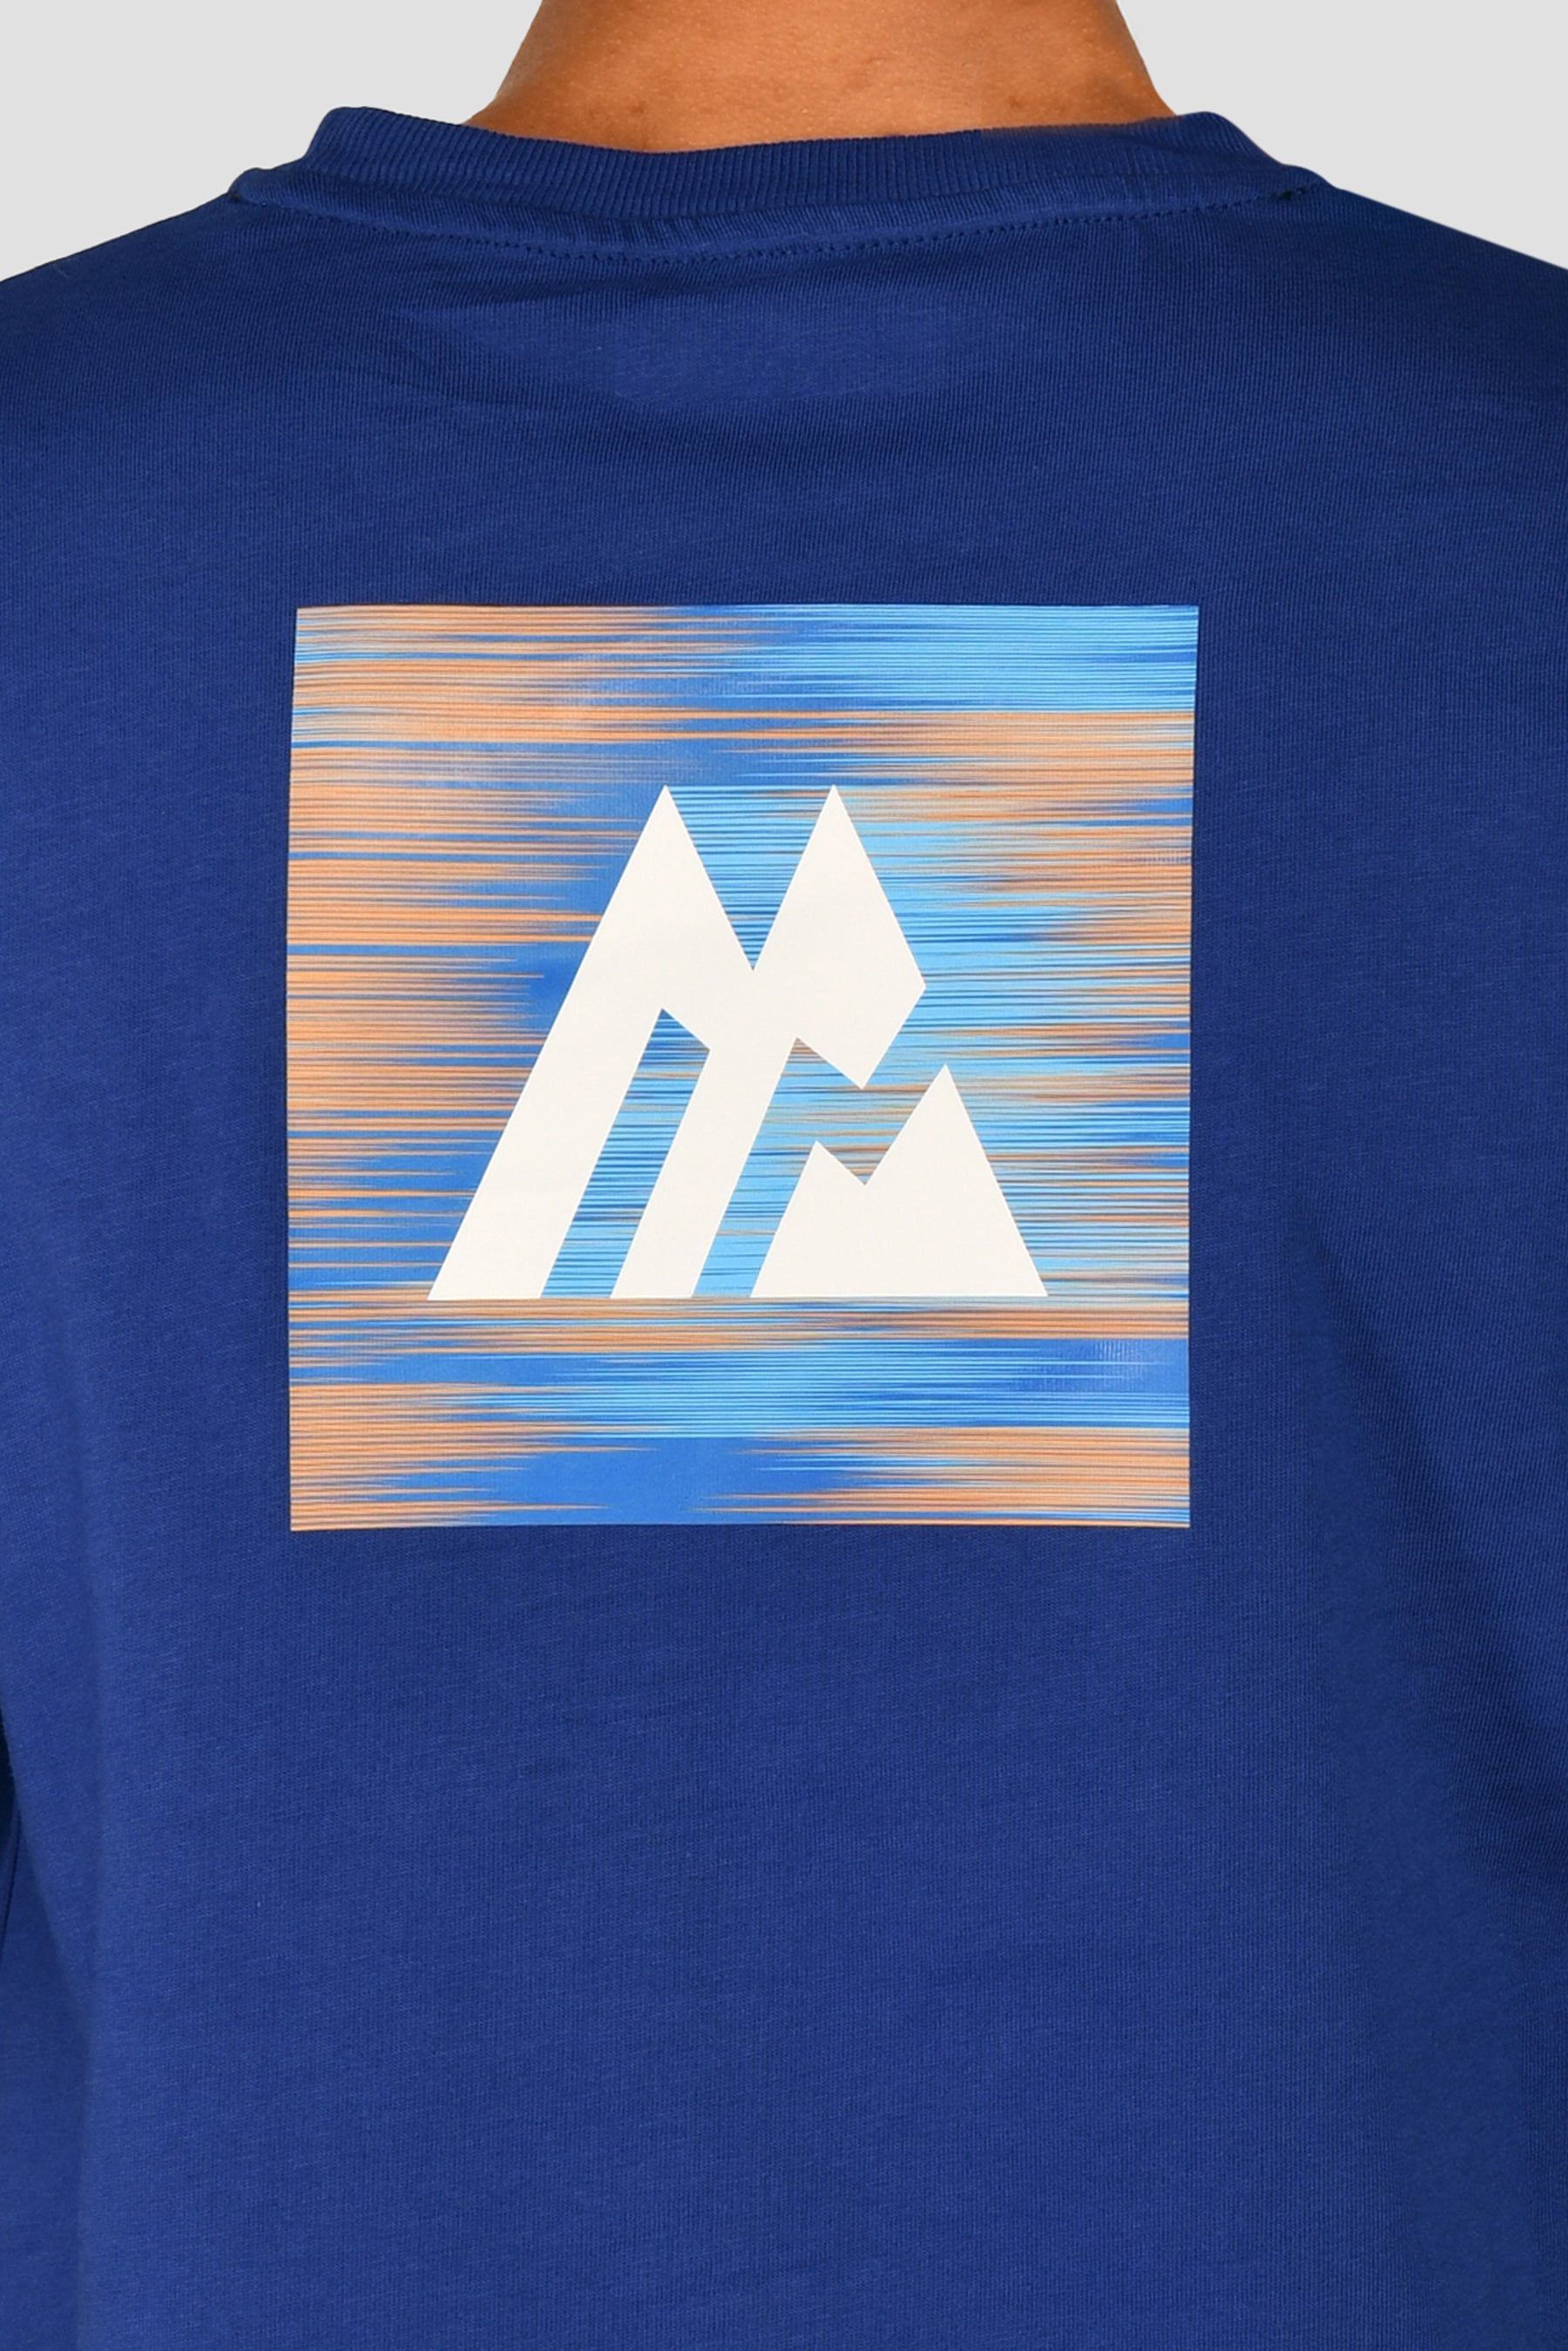 Junior Trail Box T-Shirt - Marine Blue